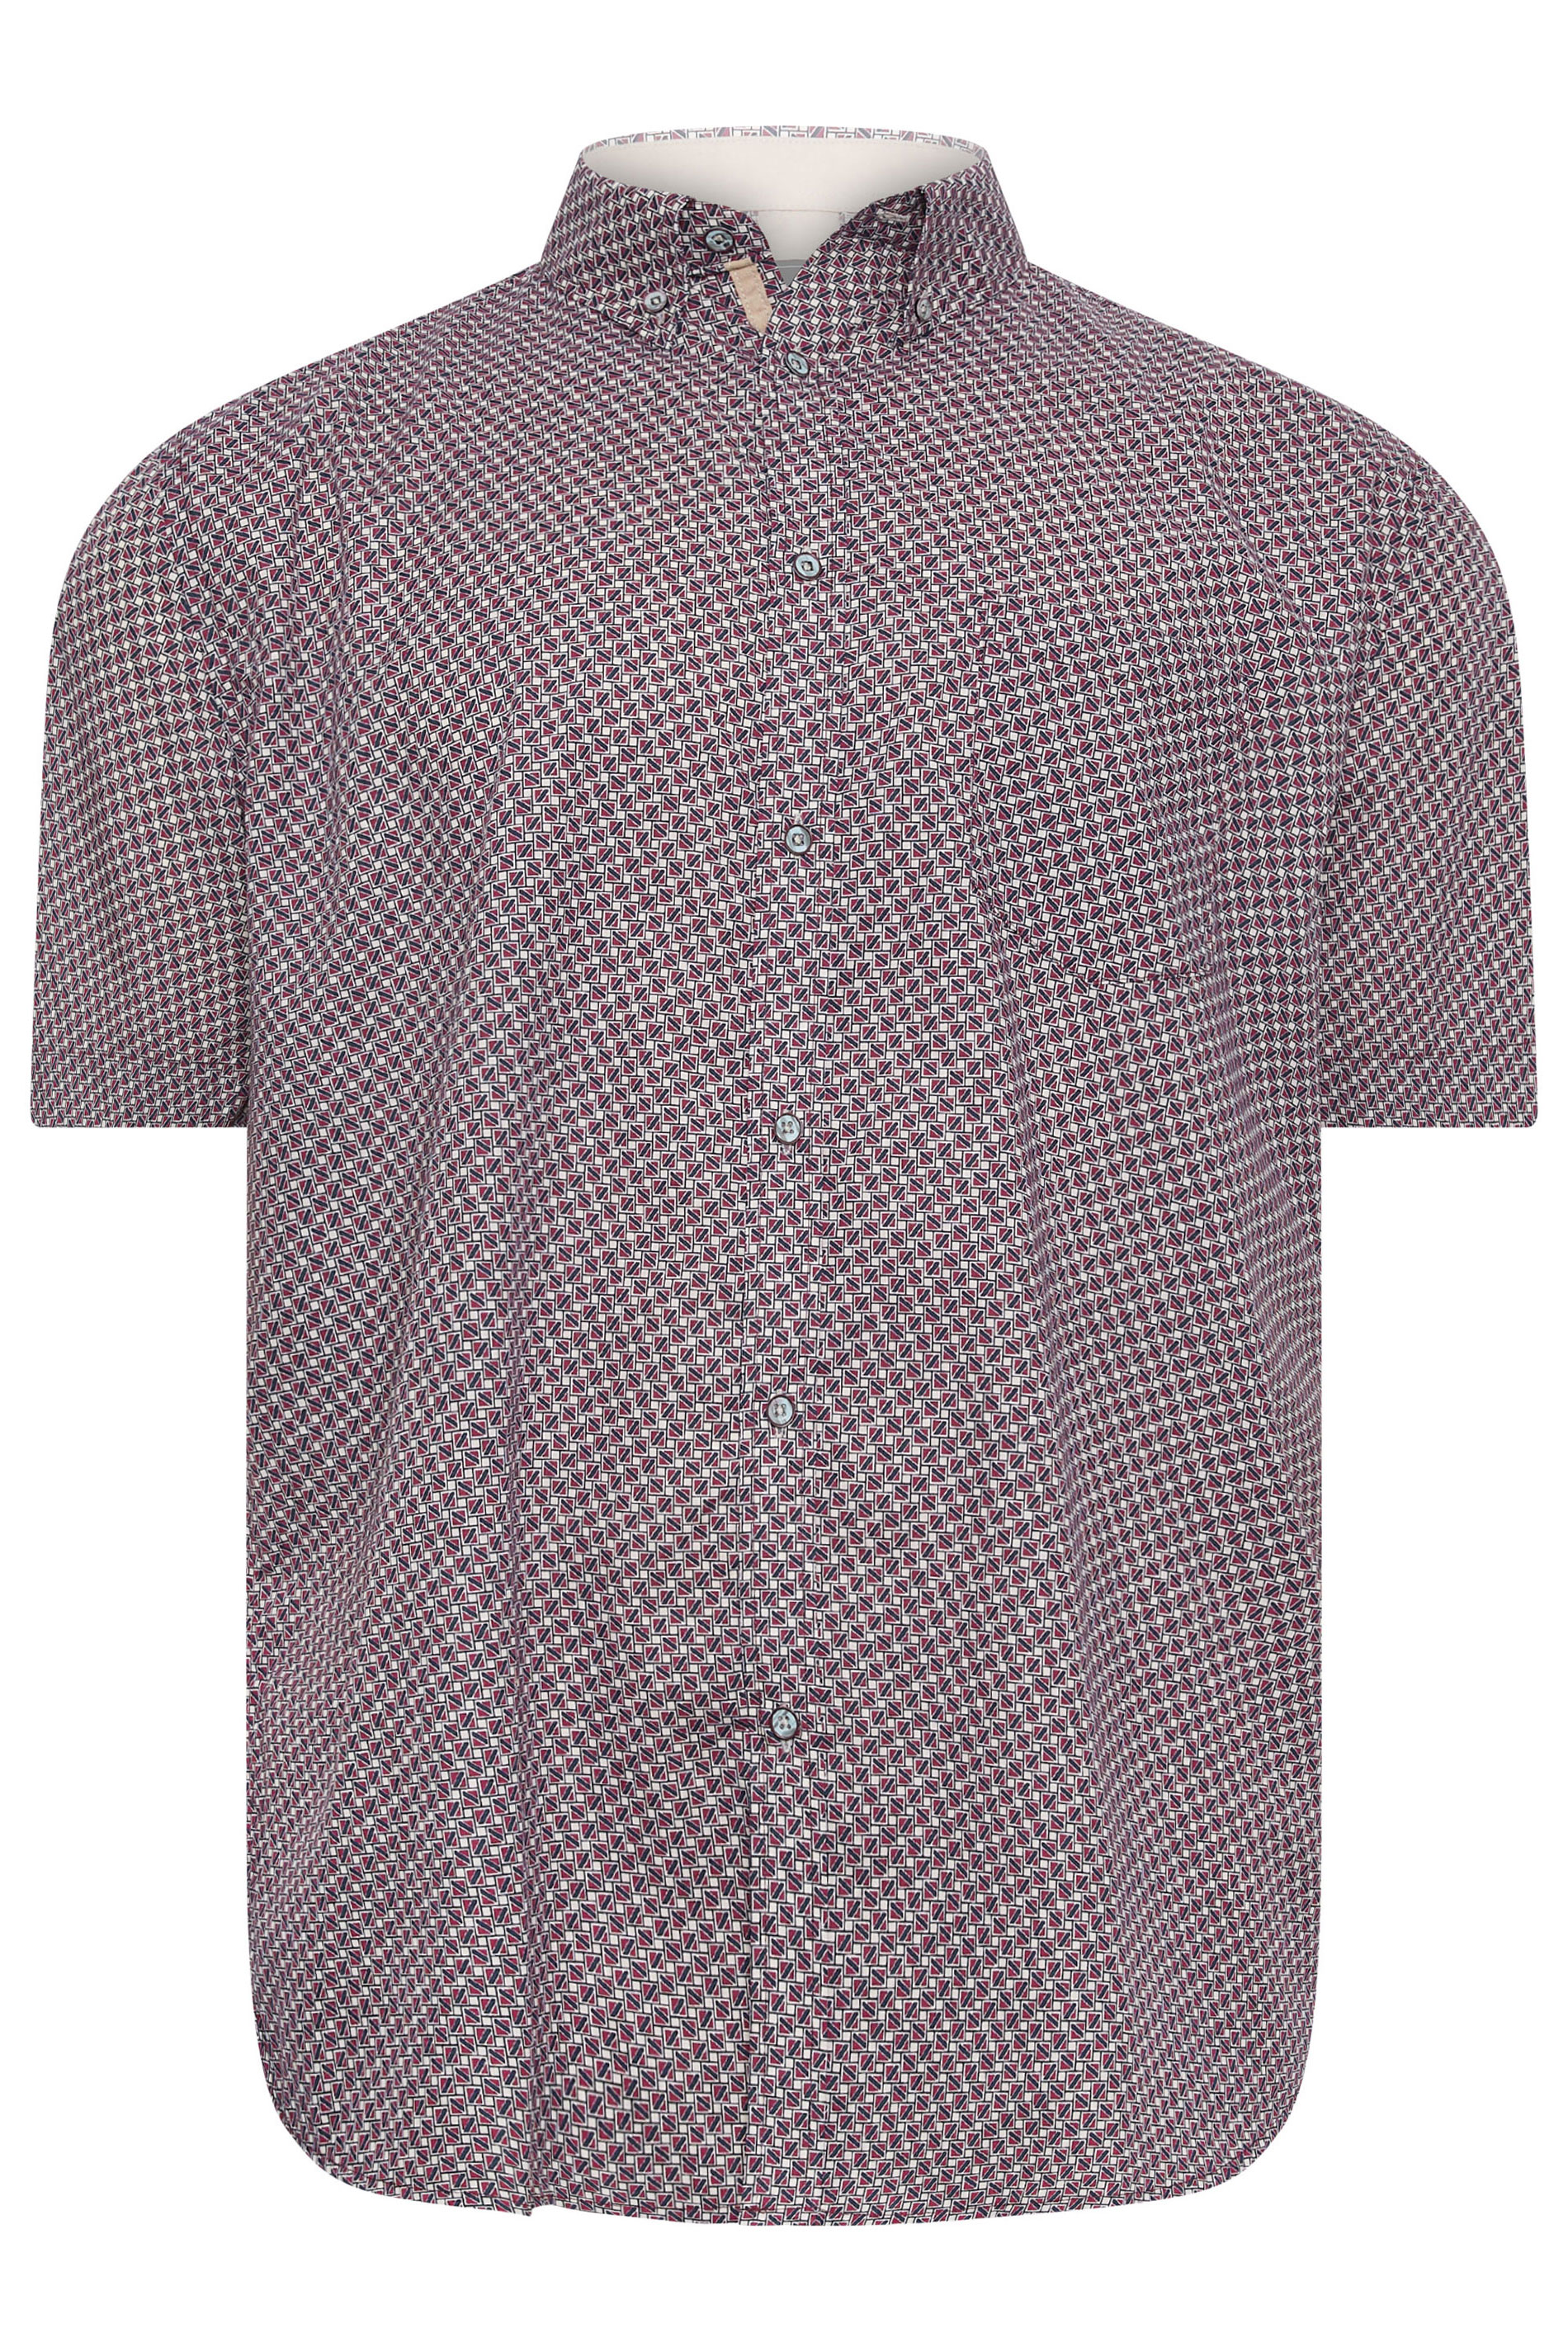 KAM Big & Tall Burgundy Red Geometric Print Short Sleeve Shirt | BadRhino 3